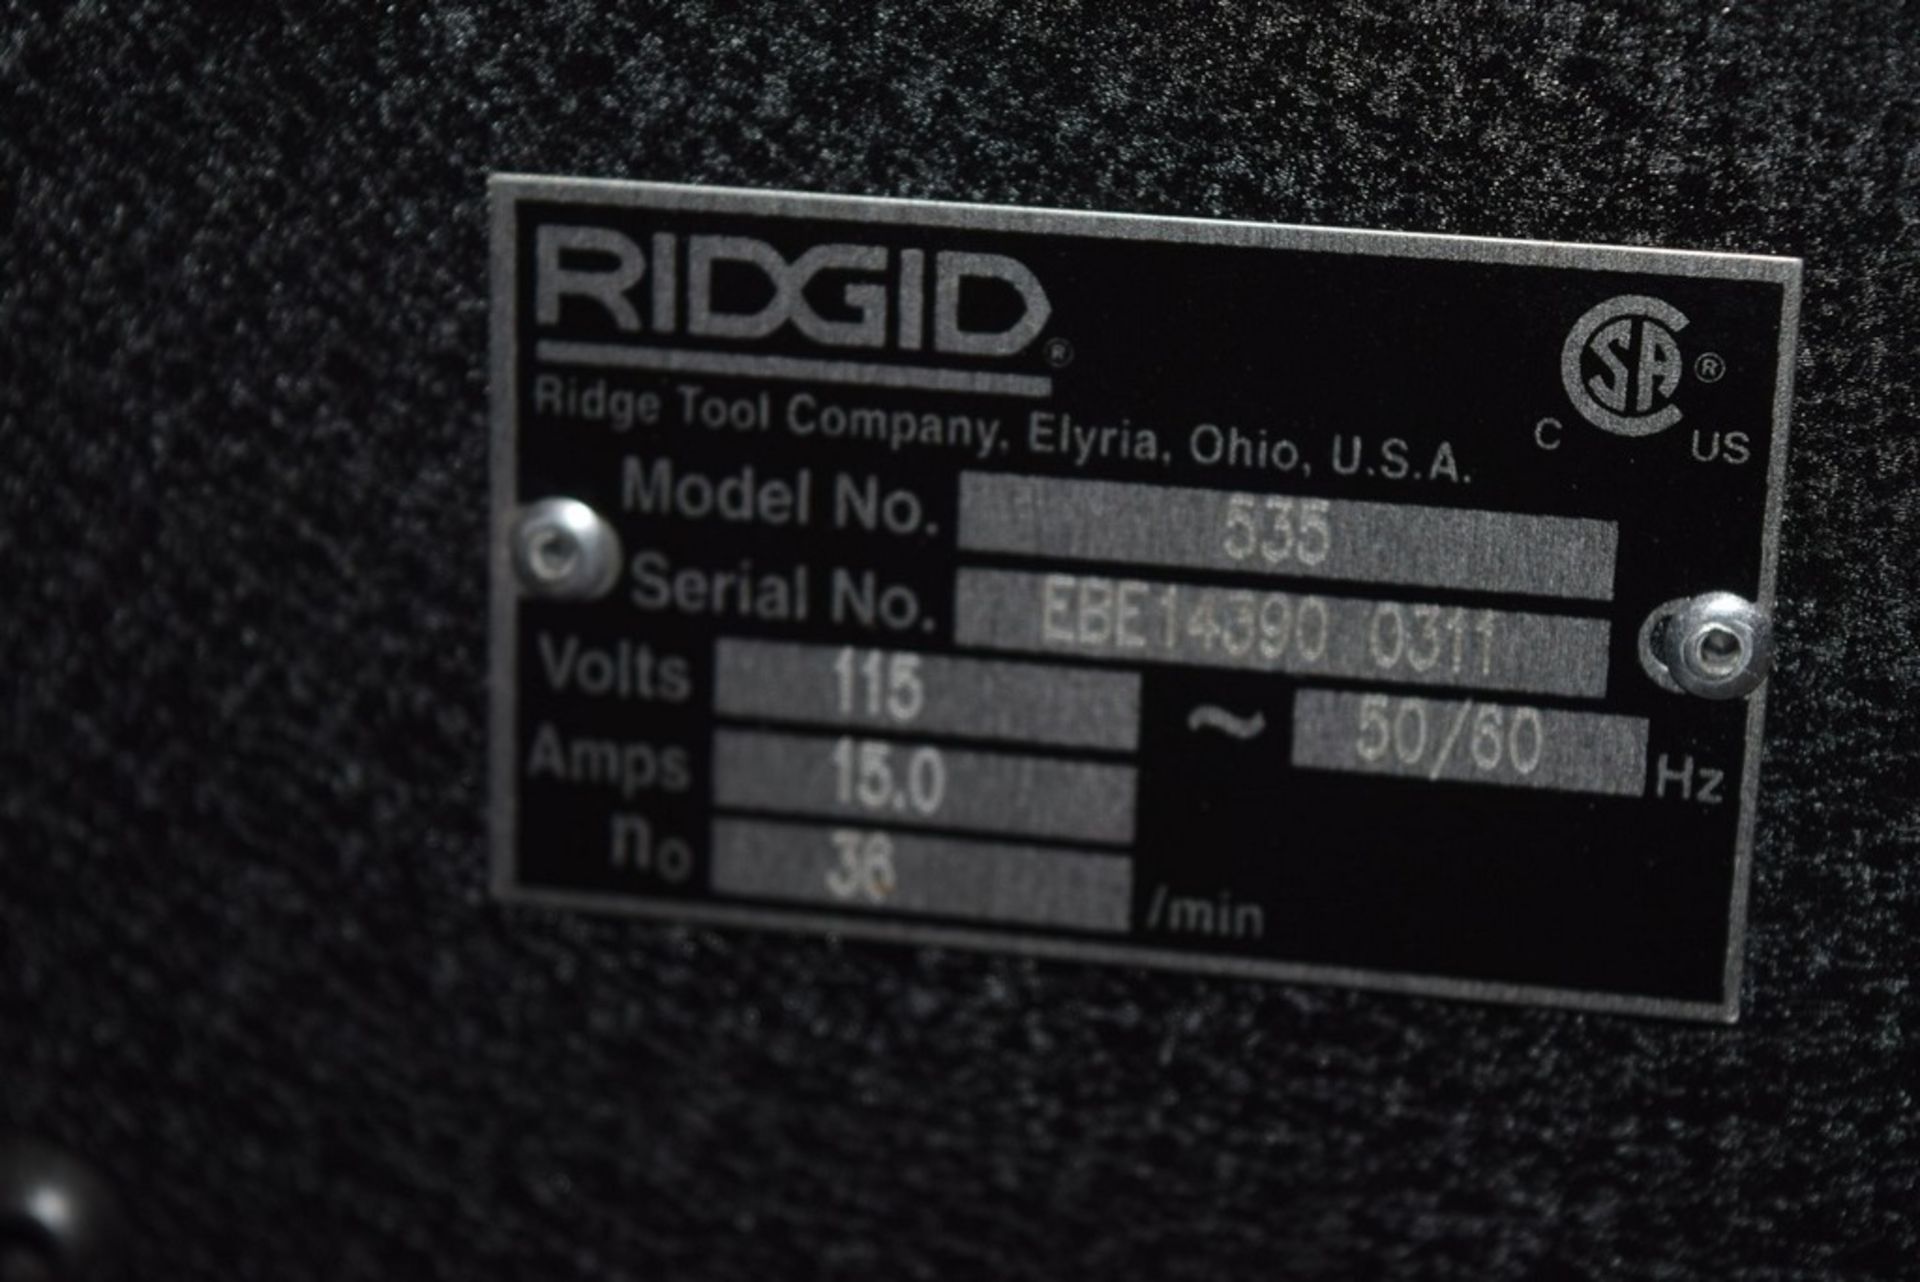 RIDGID 535 SERIES PORTABLE PIPE THREADER S/N: EBE14390-0311 - Image 8 of 8